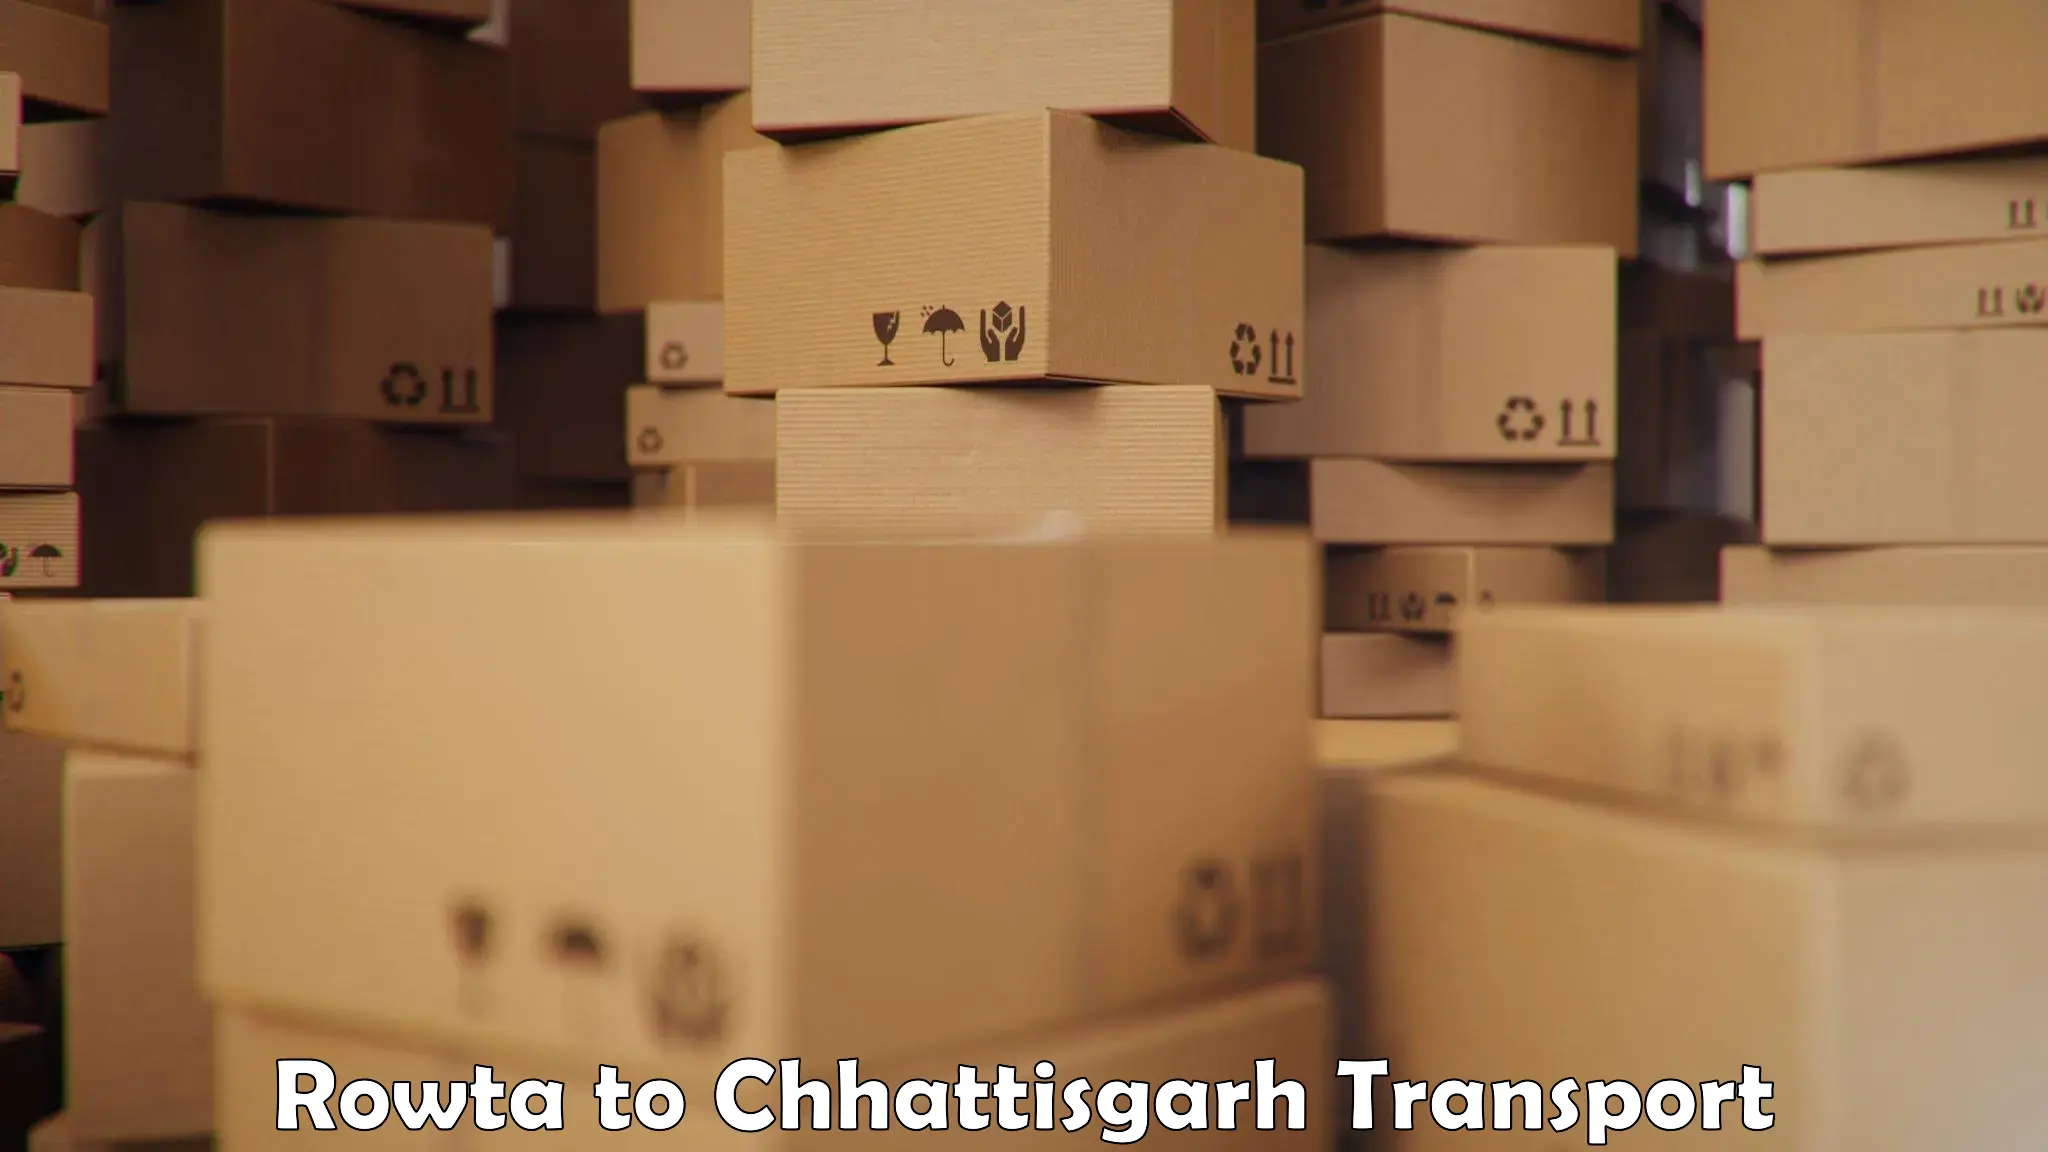 Furniture transport service Rowta to Korea Chhattisgarh